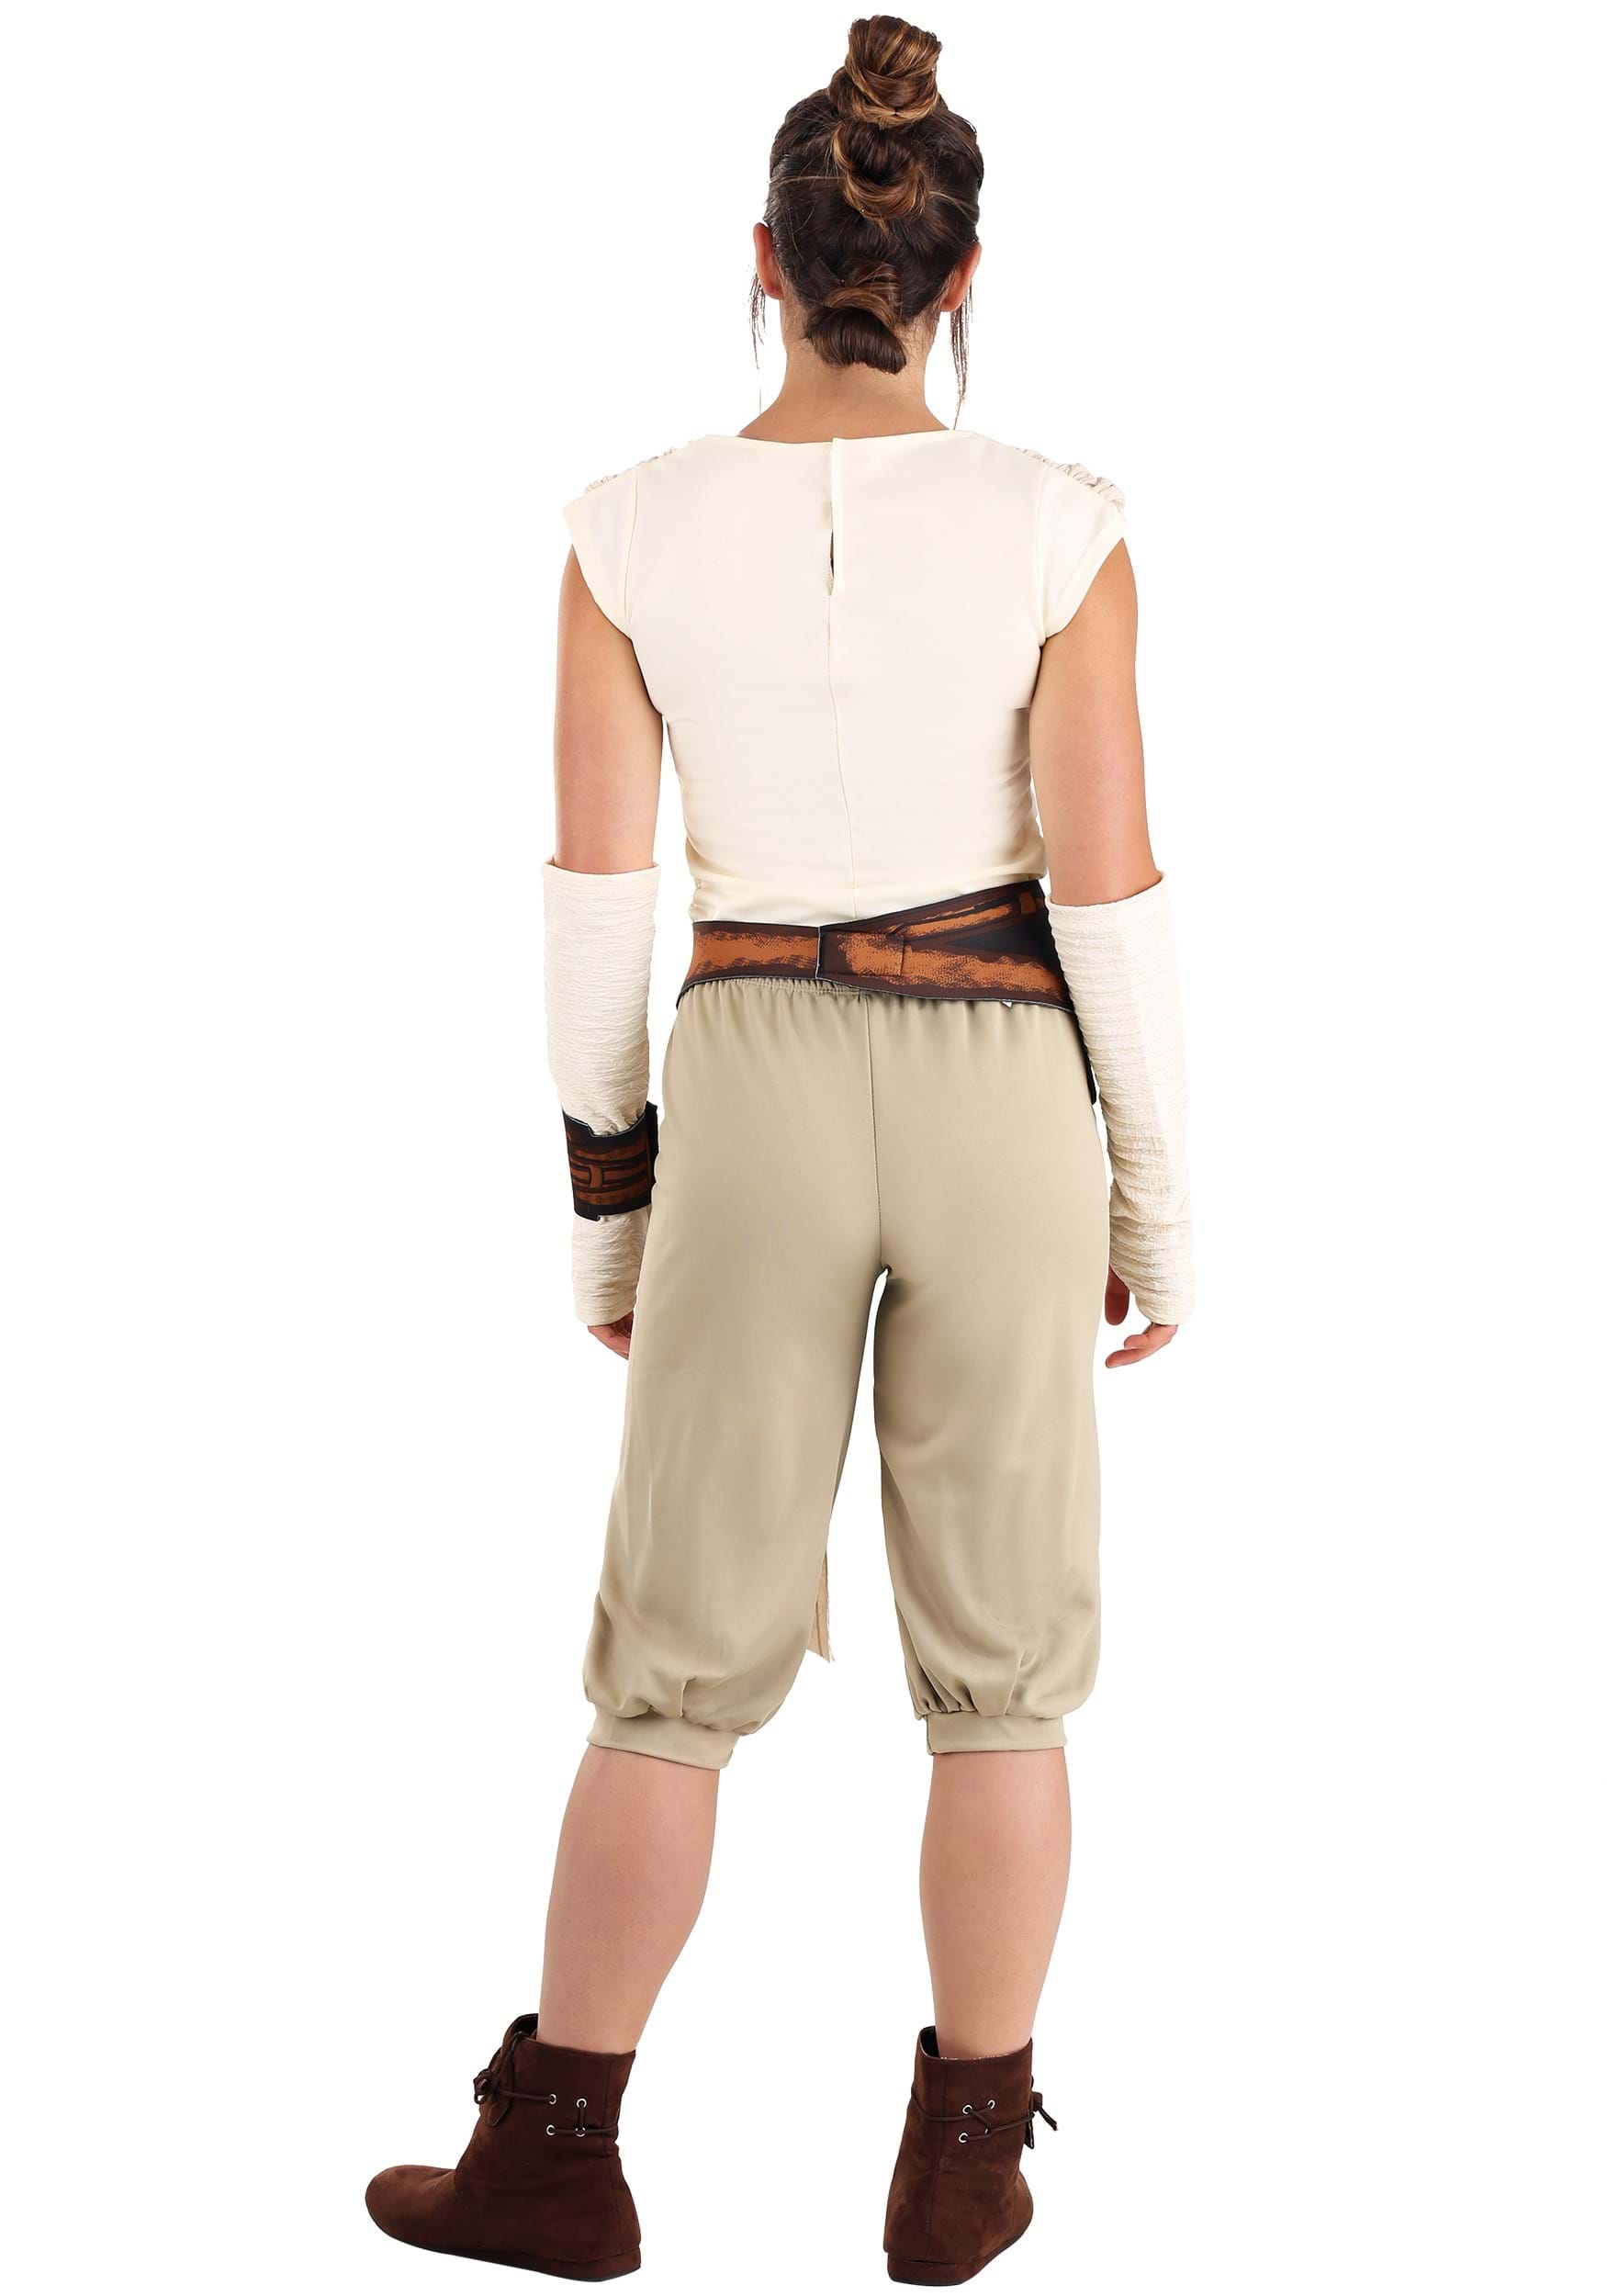 Deluxe Star Wars The Force Awakens Rey Adult Fancy Dress Costume